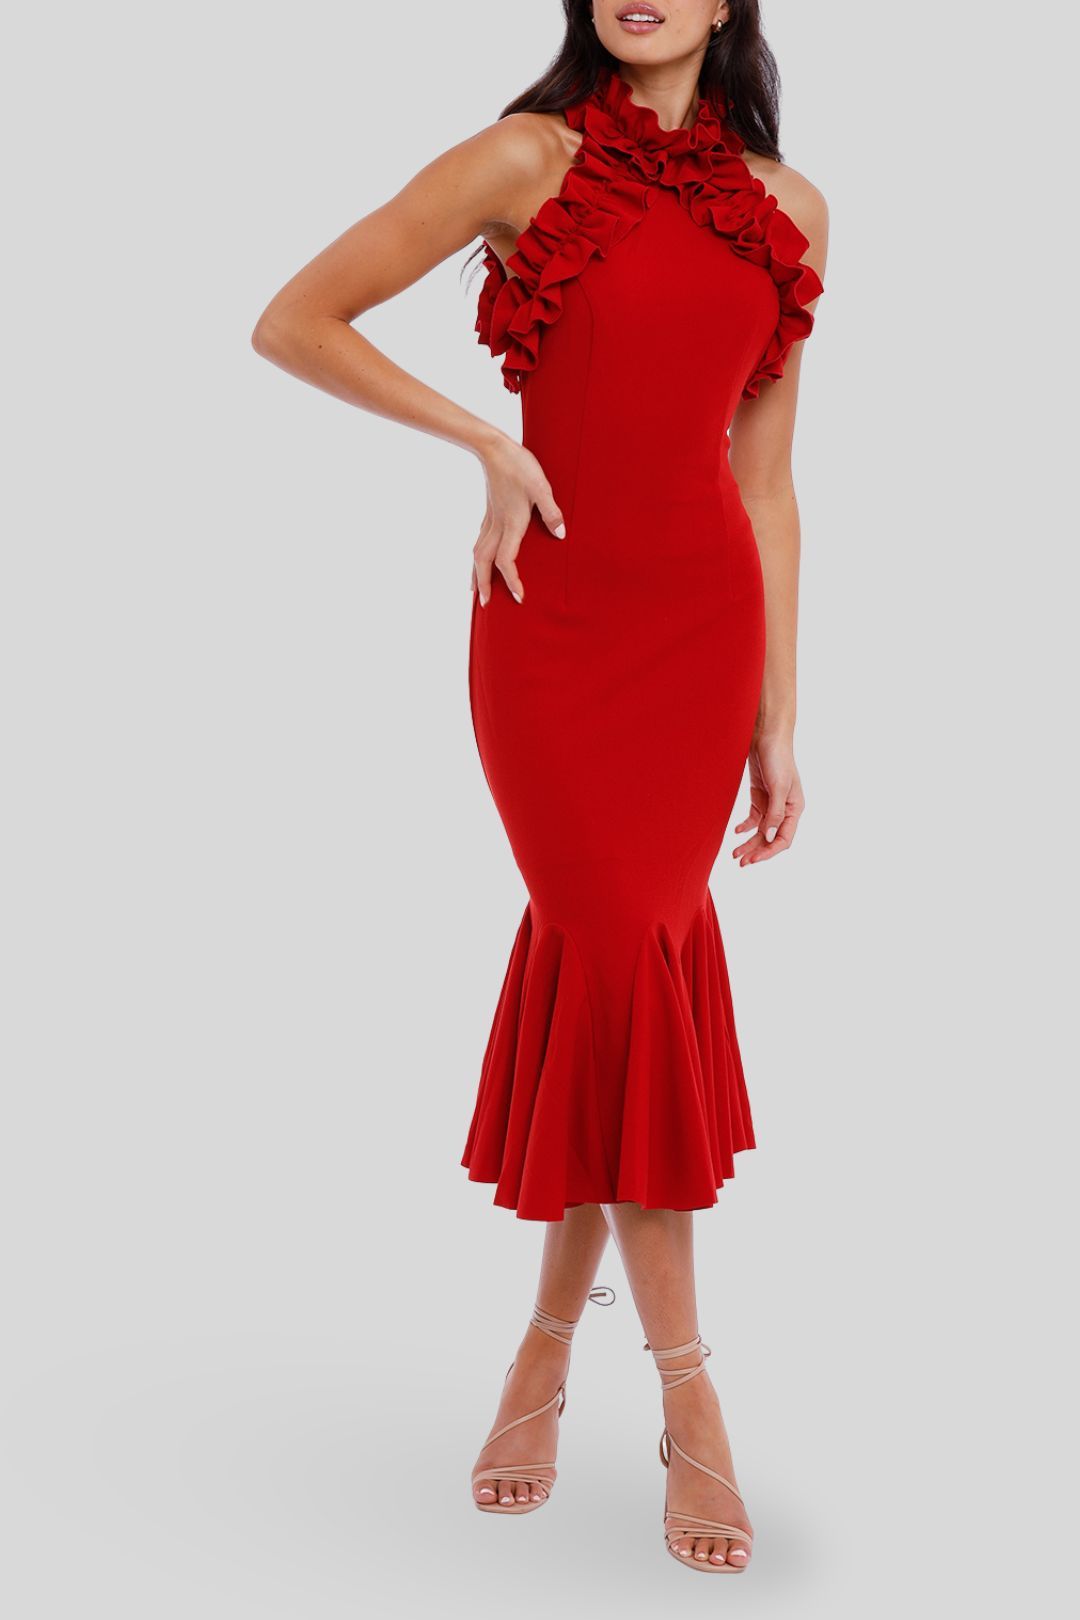 Elliatt Composure Dress Scarlet bodycon